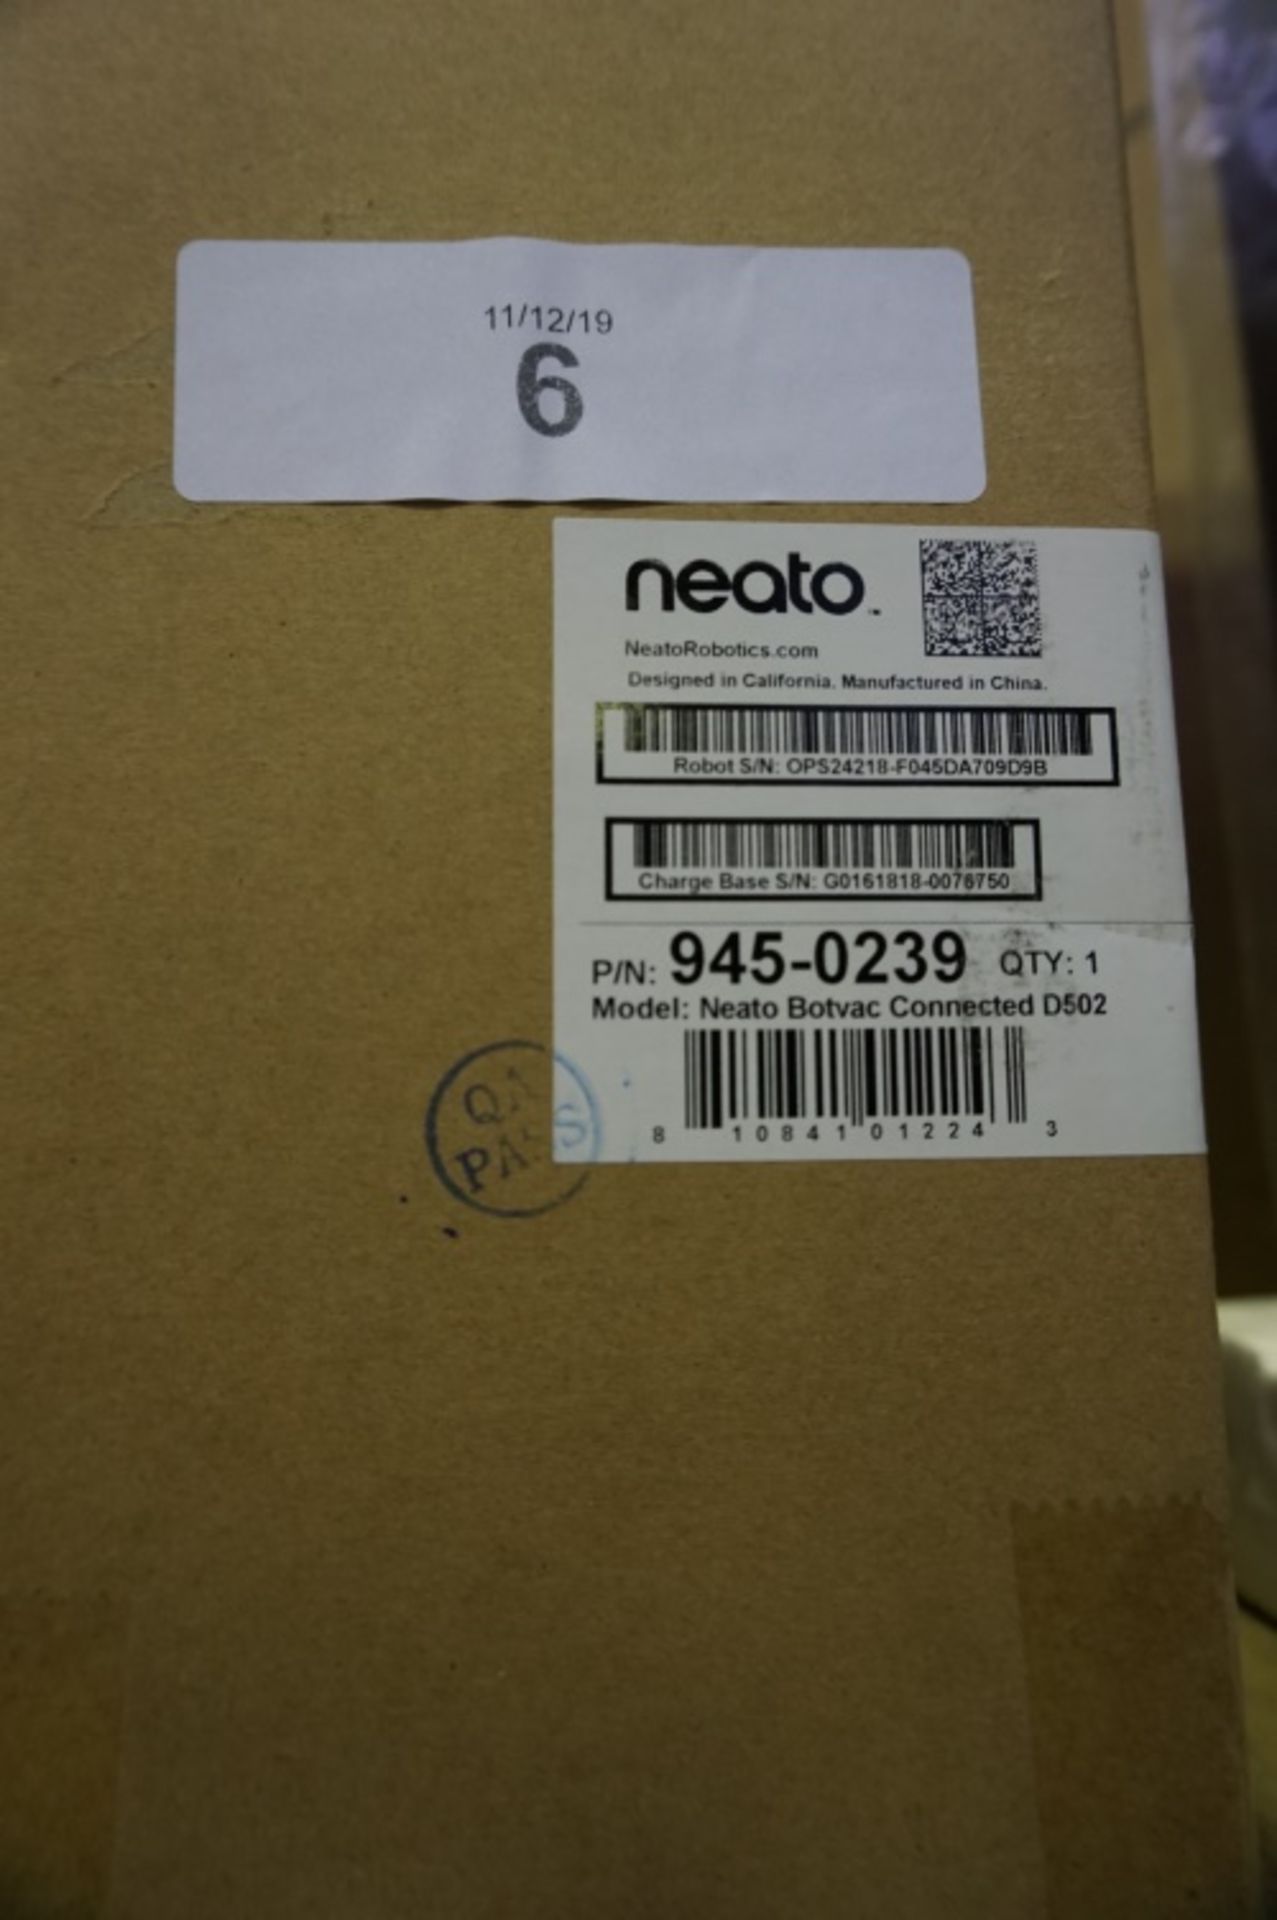 1 x Neato Botvac Connected D502 robotic vacuum - Sealed new (esb1)